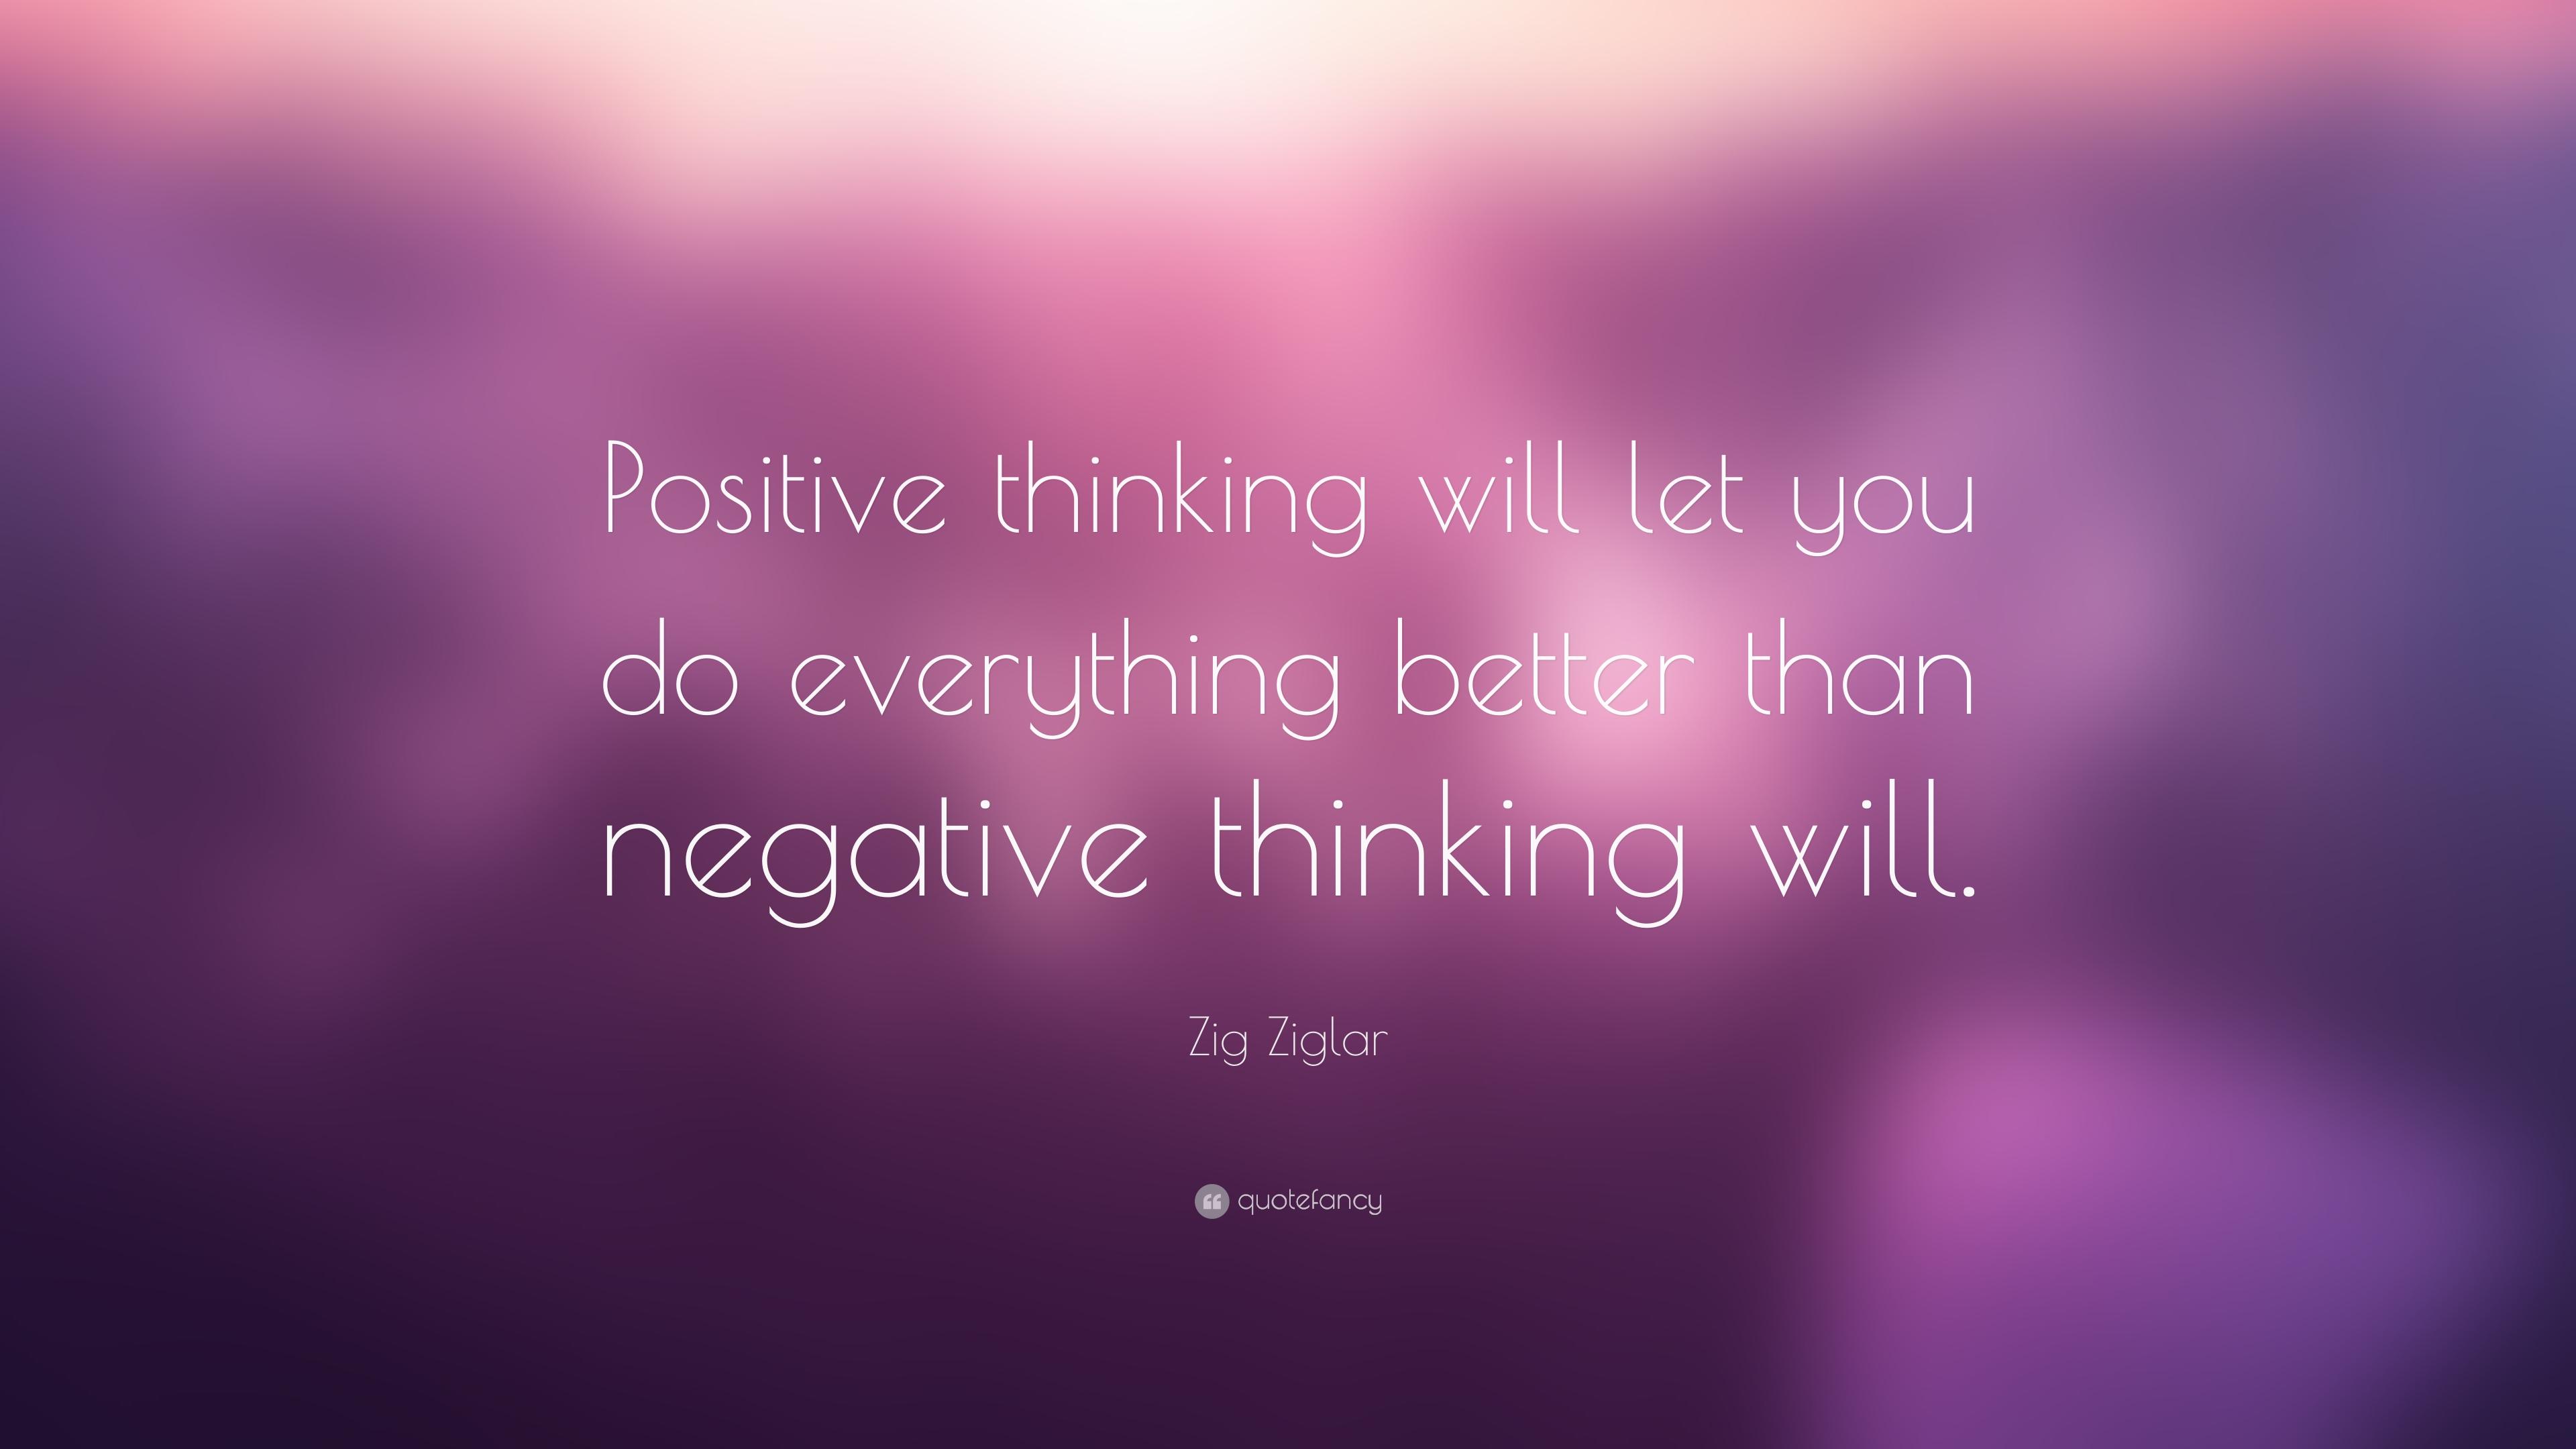 Zig Ziglar Quote: “Positive thinking will let you do